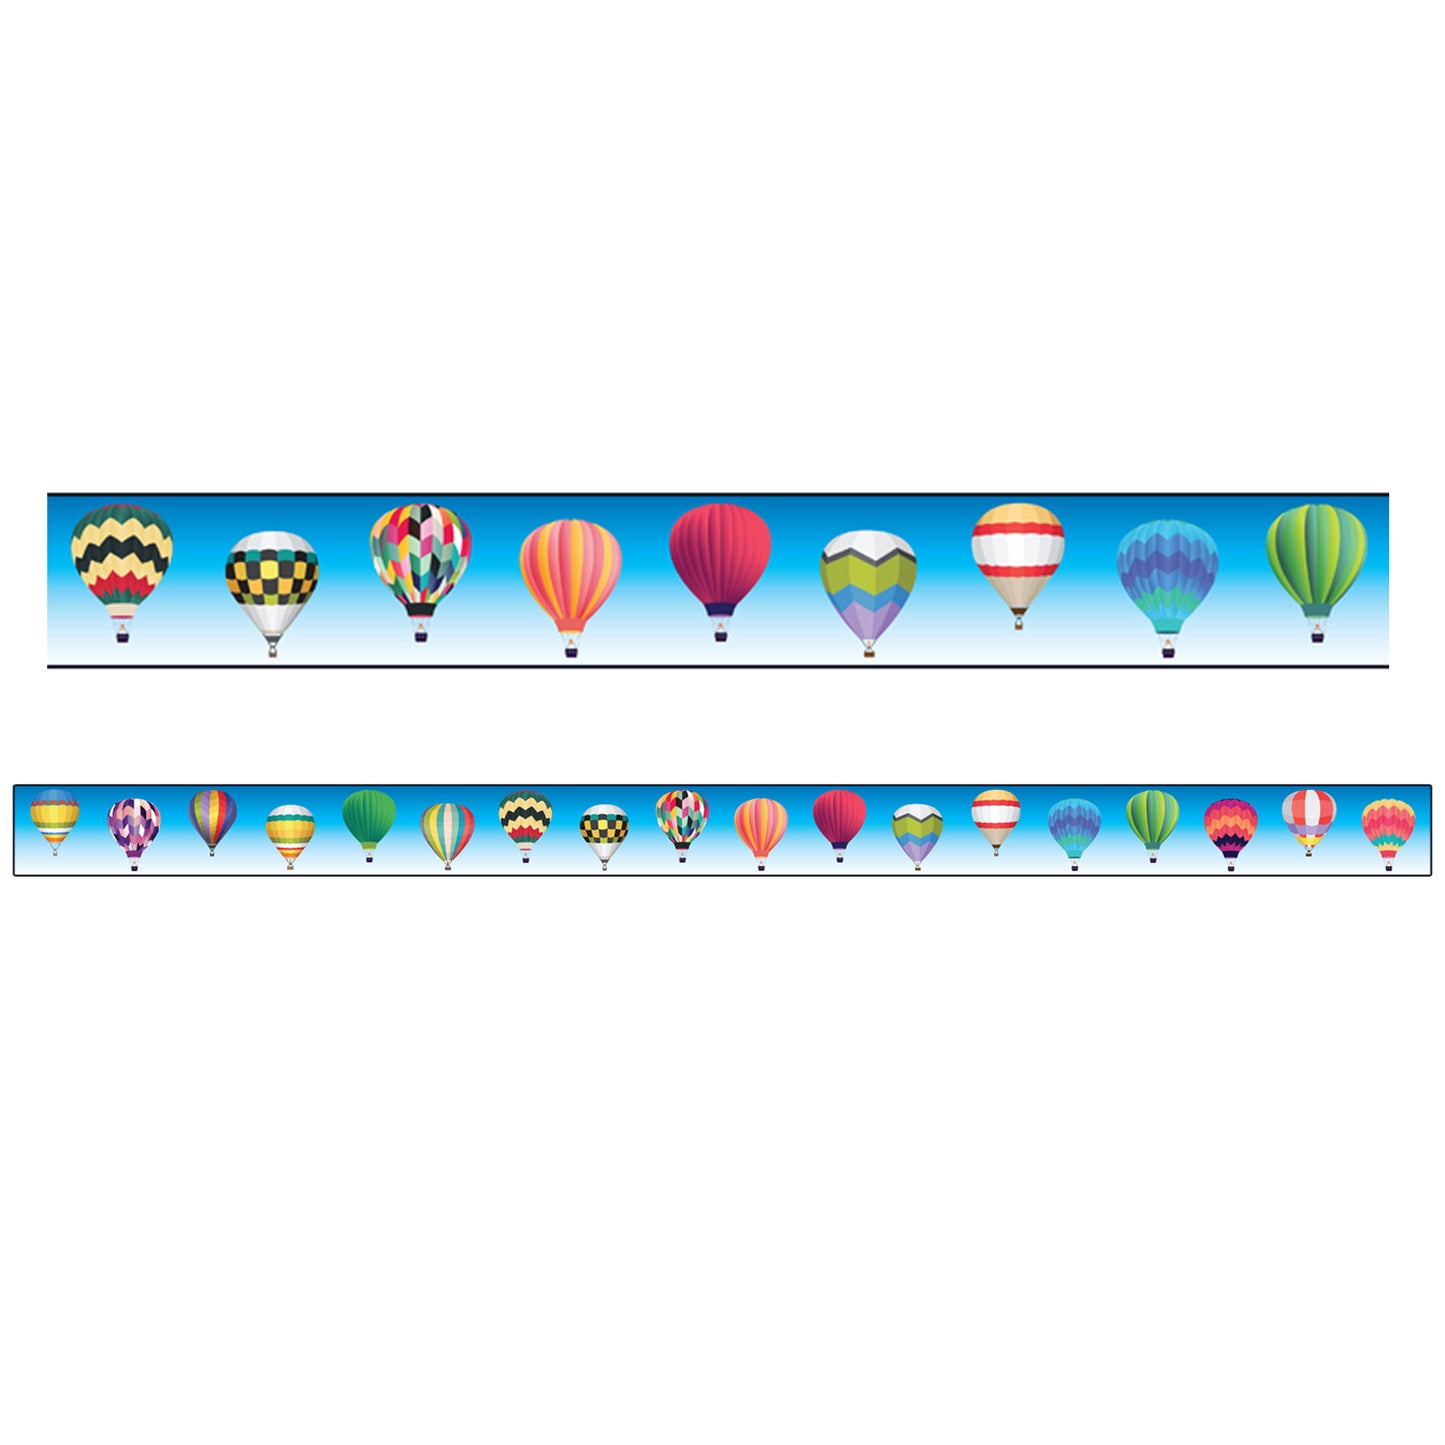 Borders/Trims, Magnetic, Rectangle Cut - 1-1/2" x 24", Hot Air Balloon Theme, 24' per Pack, 2 Packs